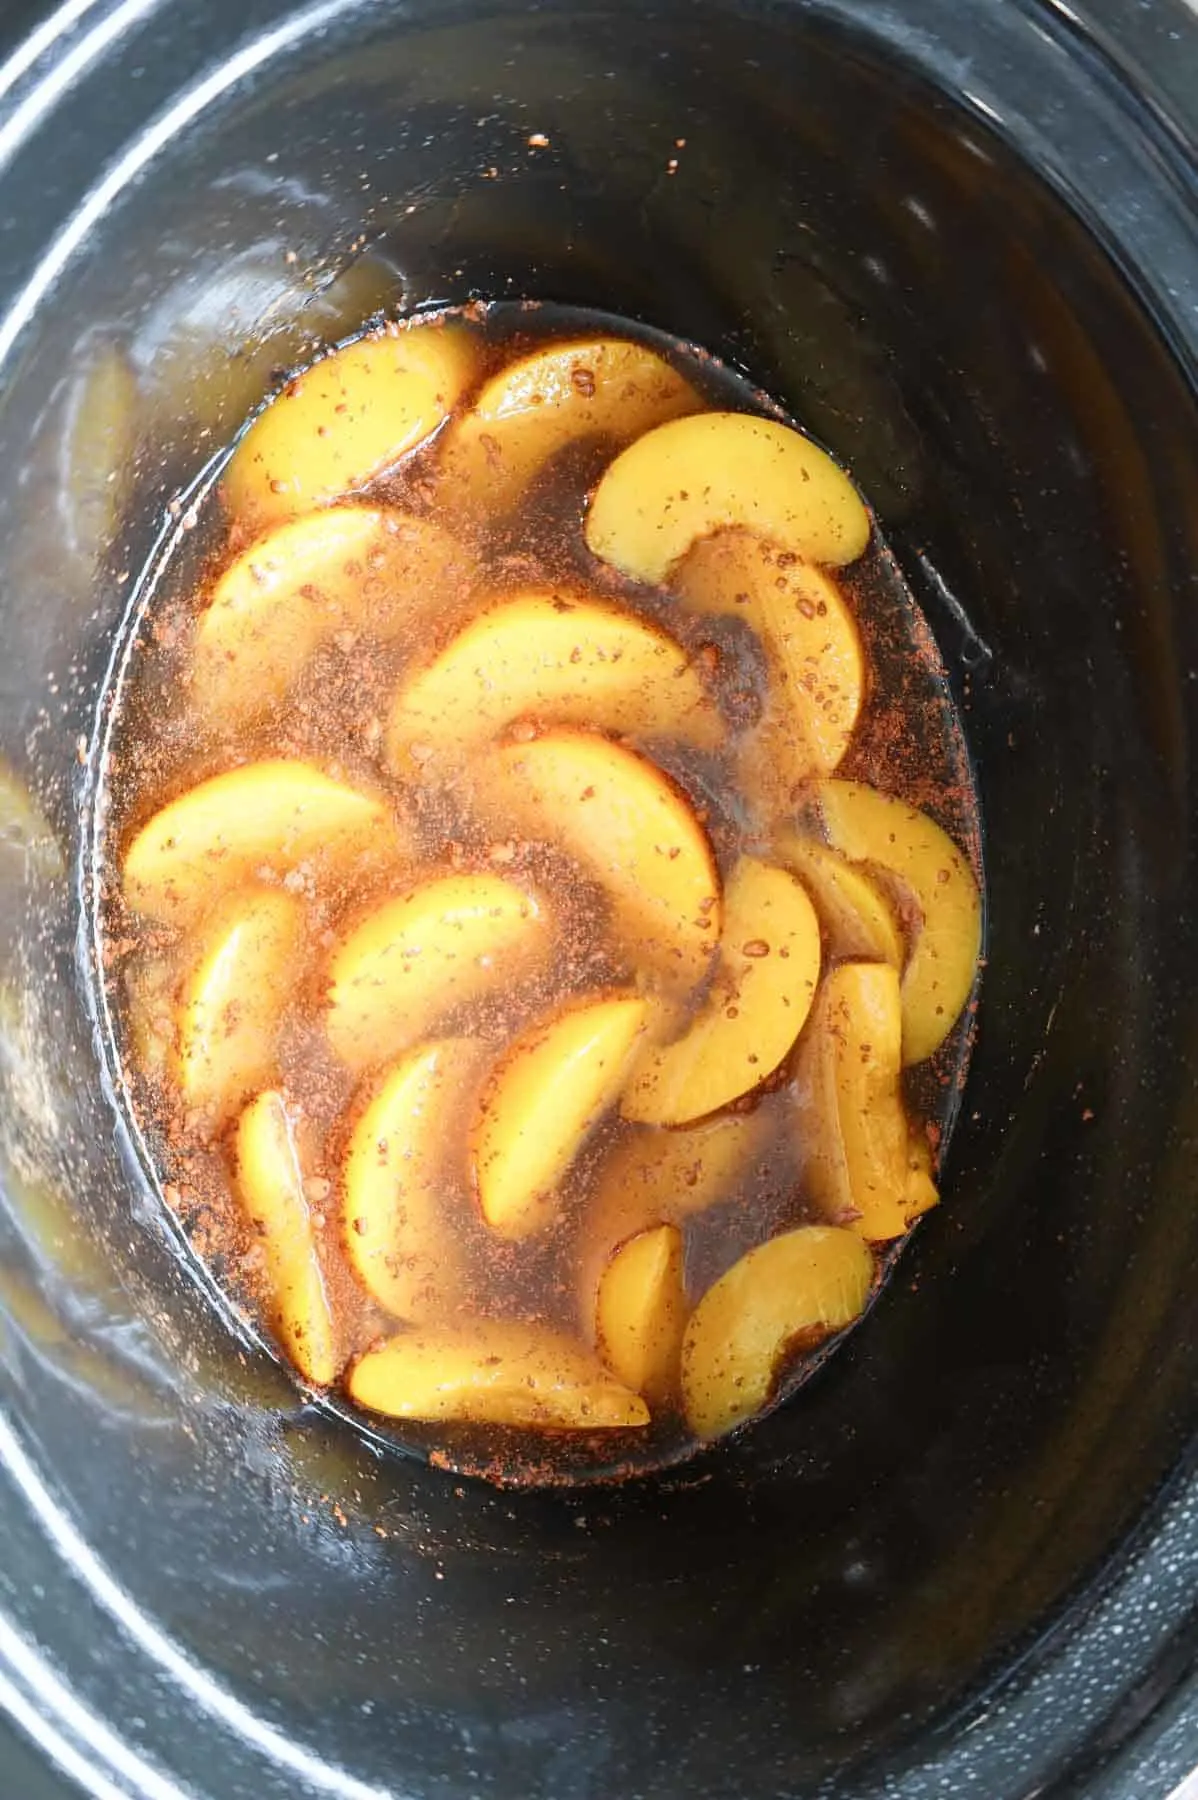 sliced peaches, brown sugar and cinnamon mixture in a crock pot